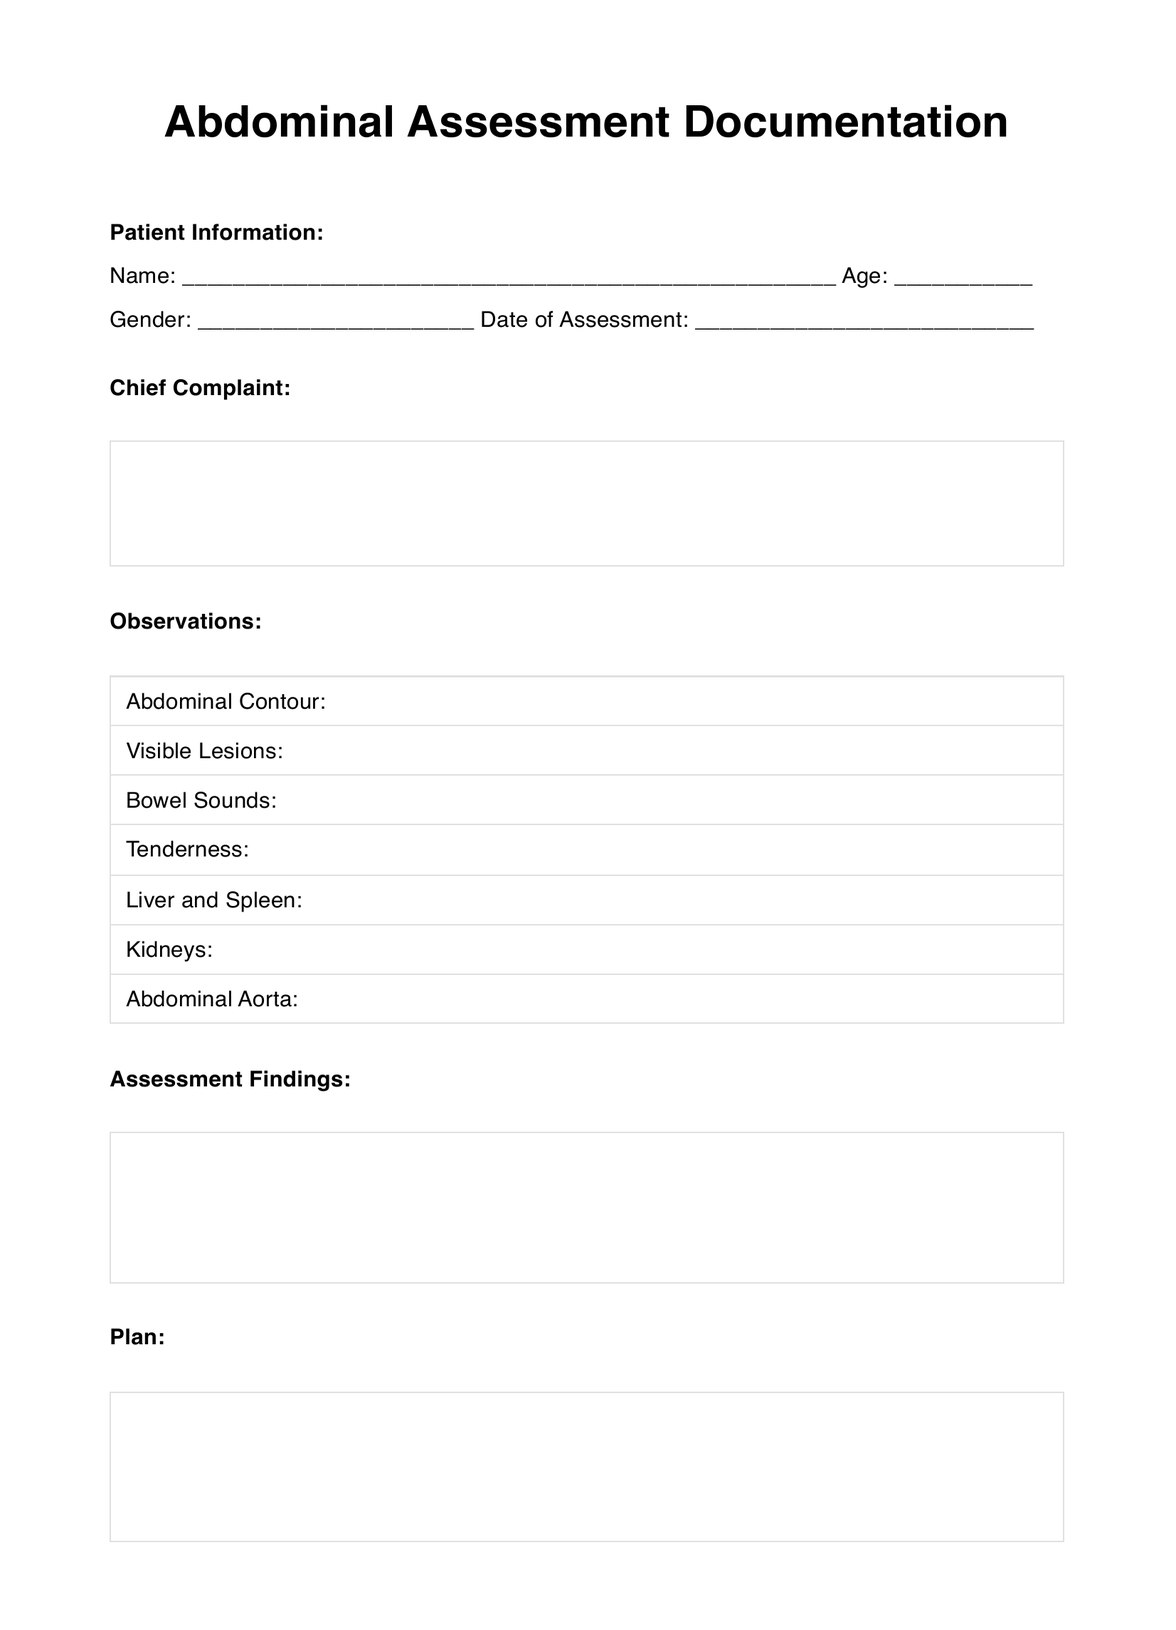 Abdominal Assessment Documentation PDF Example